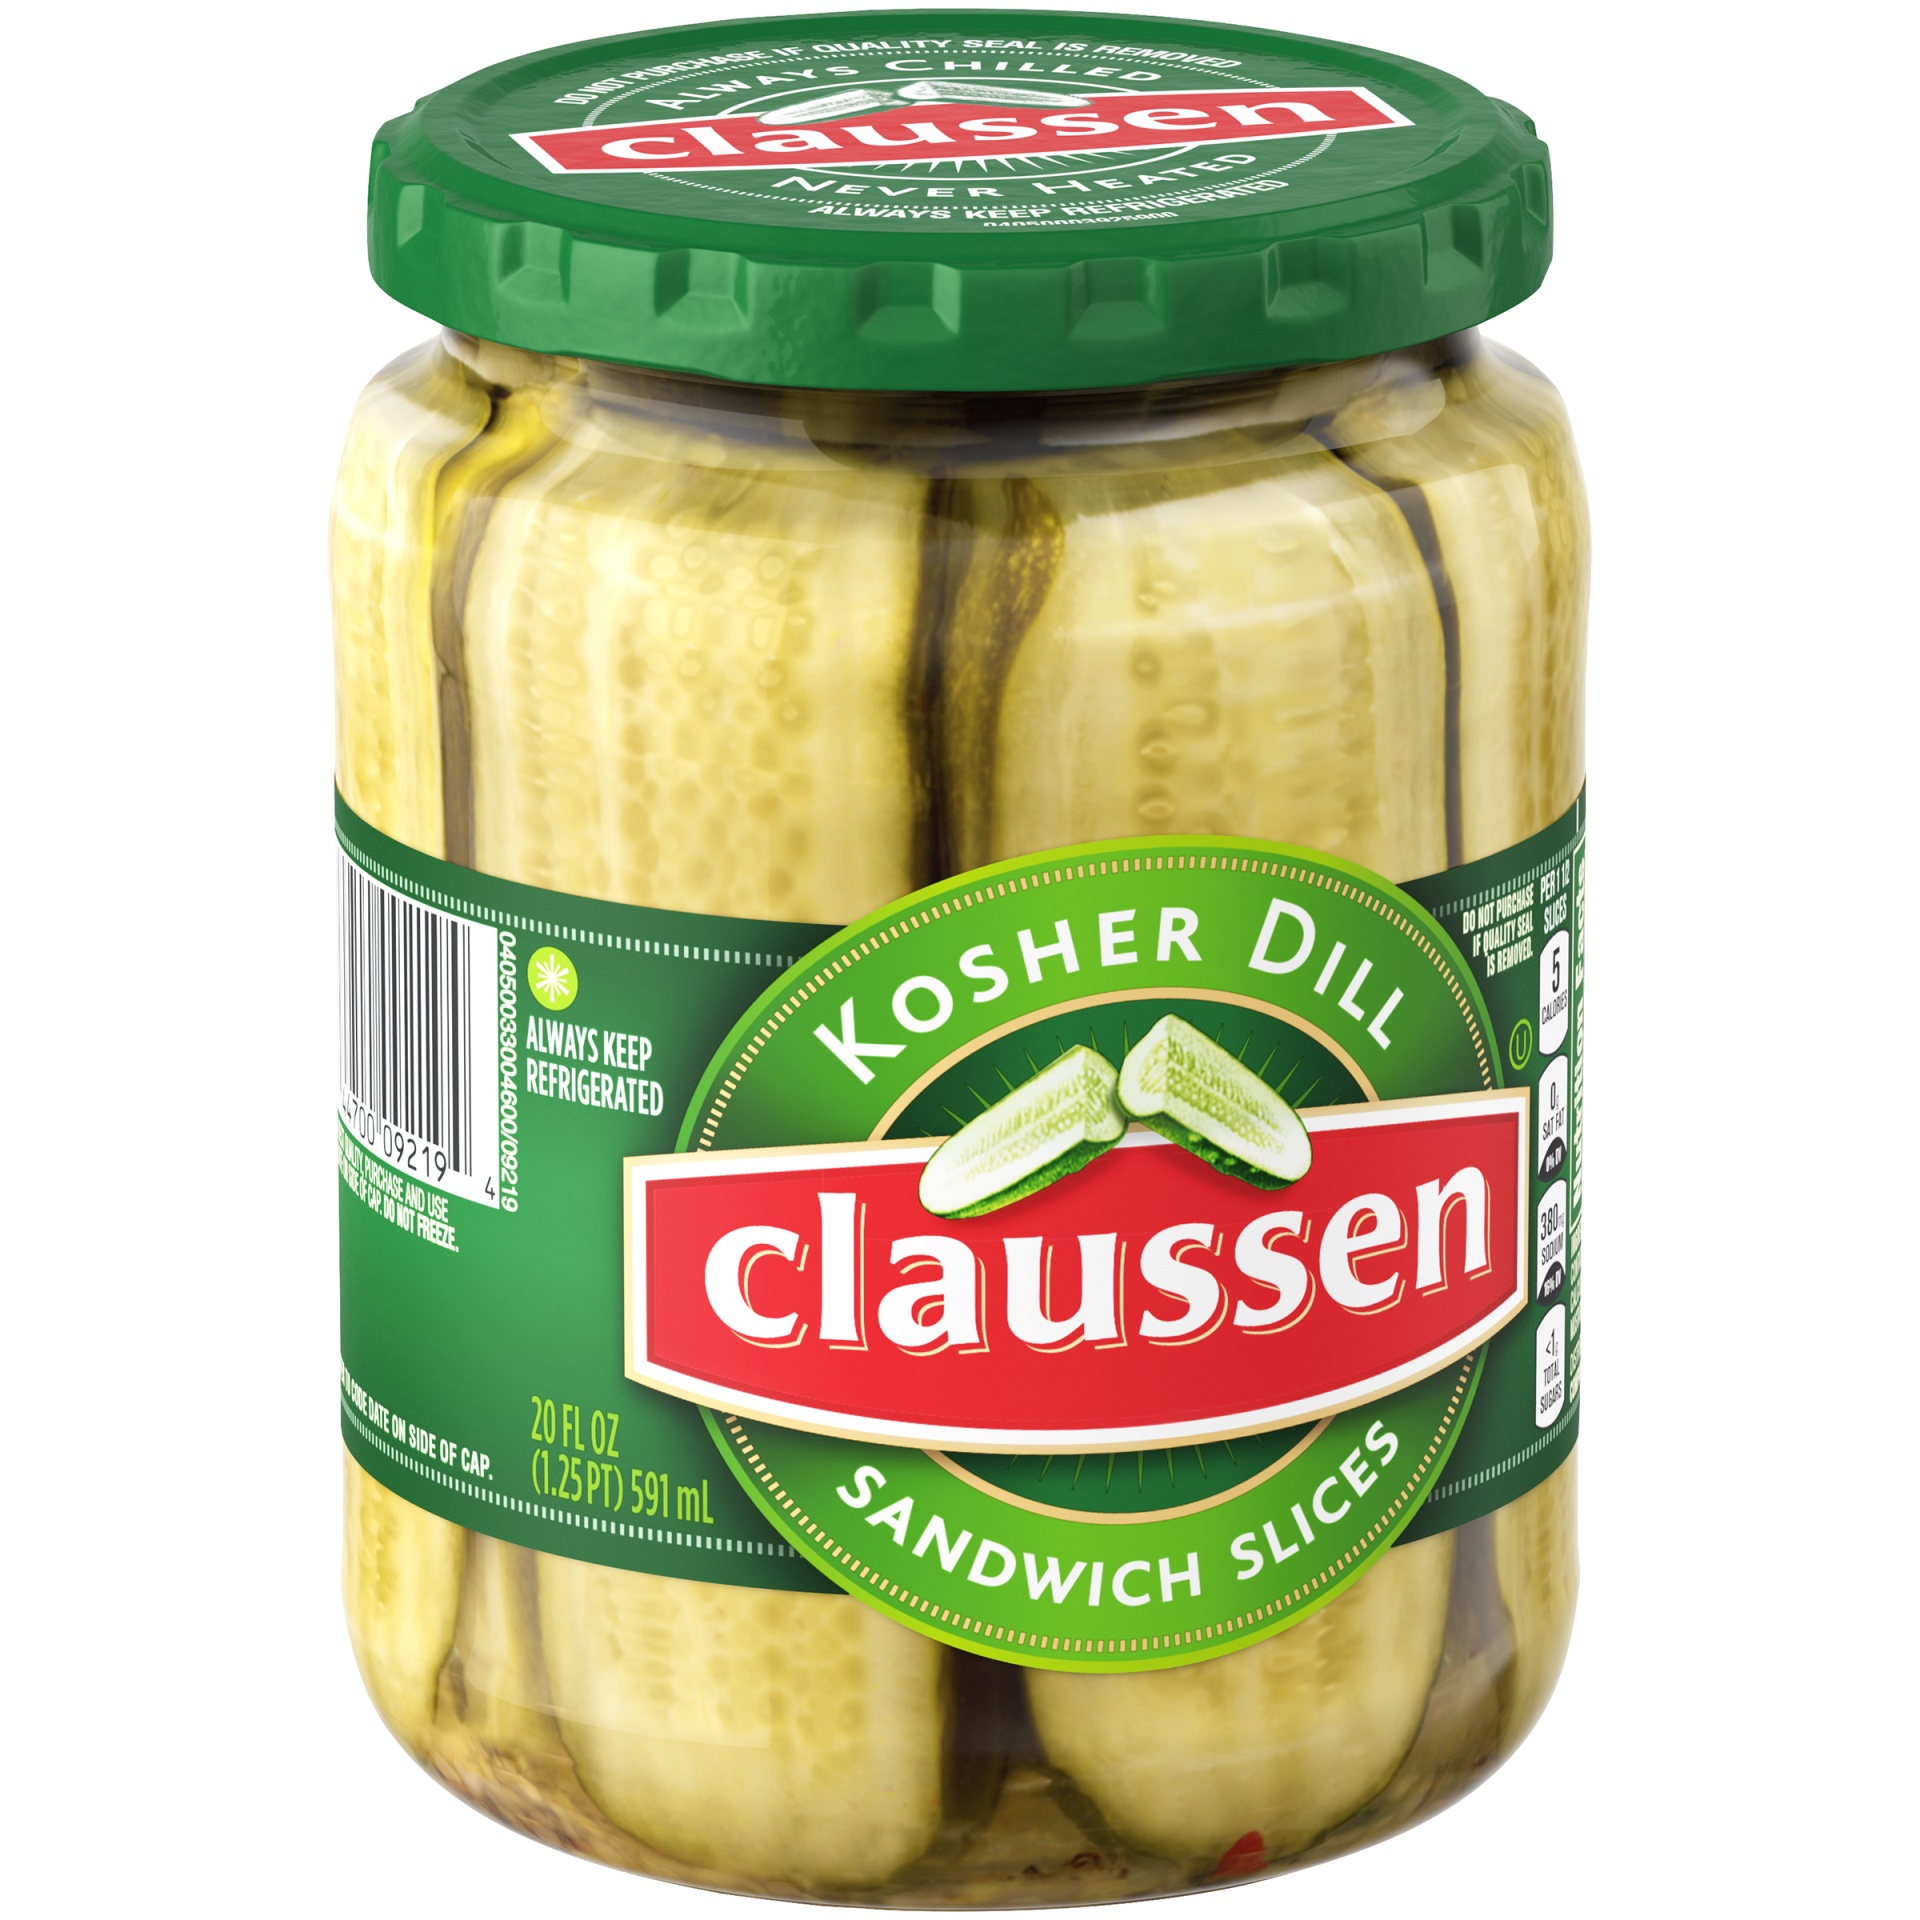 slide 2 of 6, Claussen Kosher Dill Pickle Sandwich Slices, 20 oz